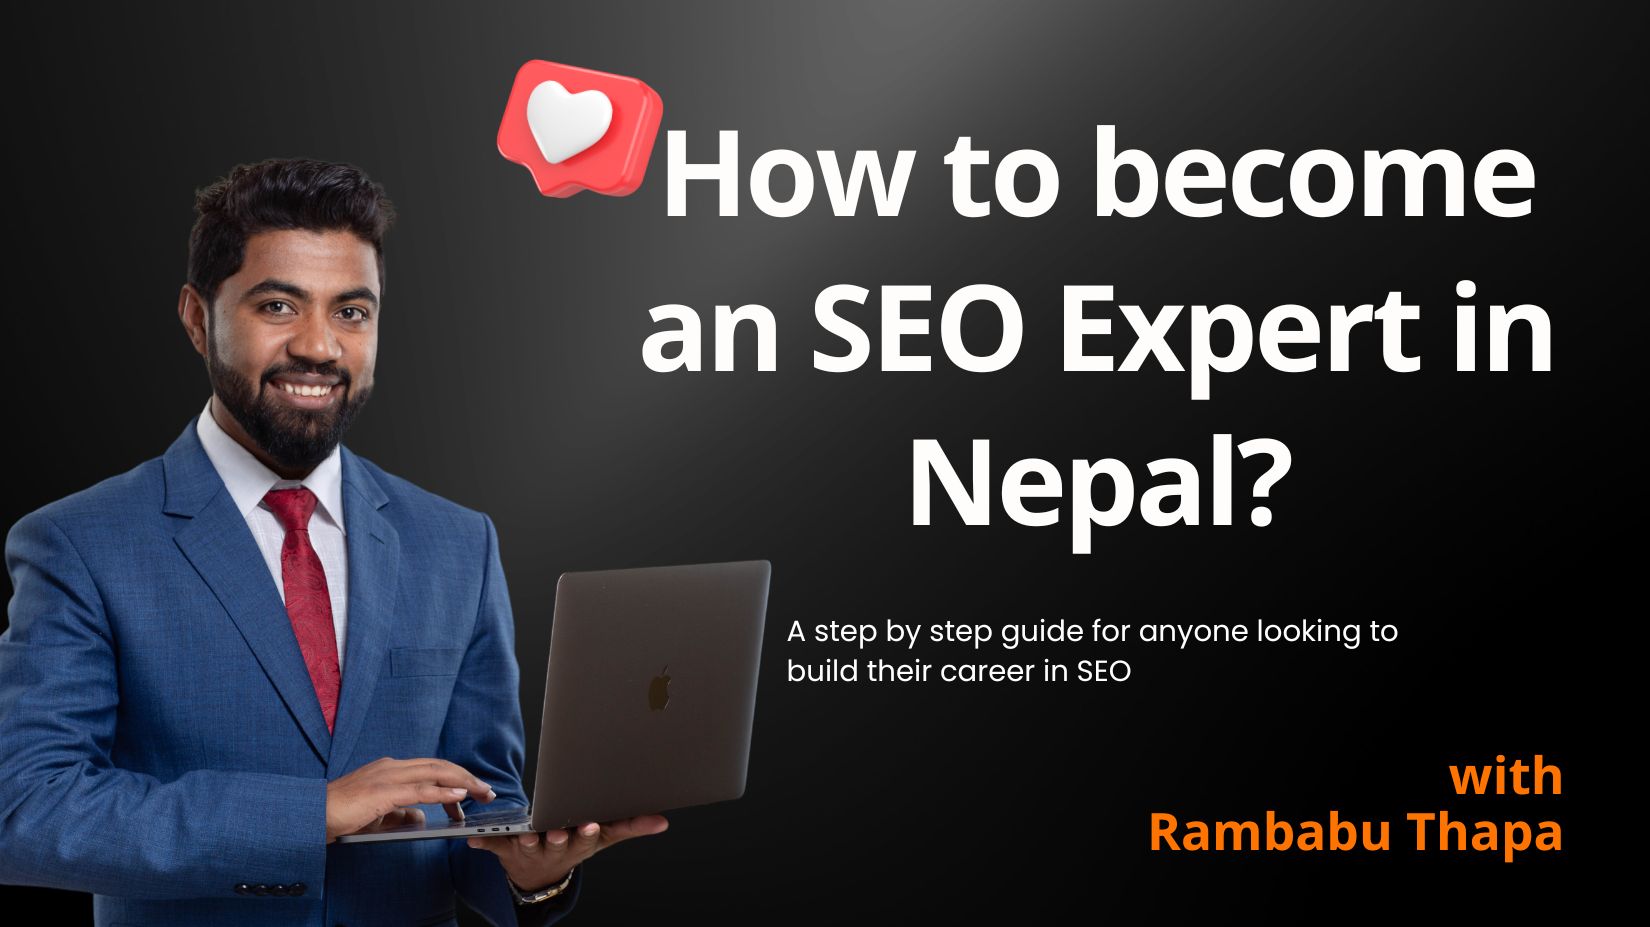 Rambabu's guide on becoming an SEO Expert